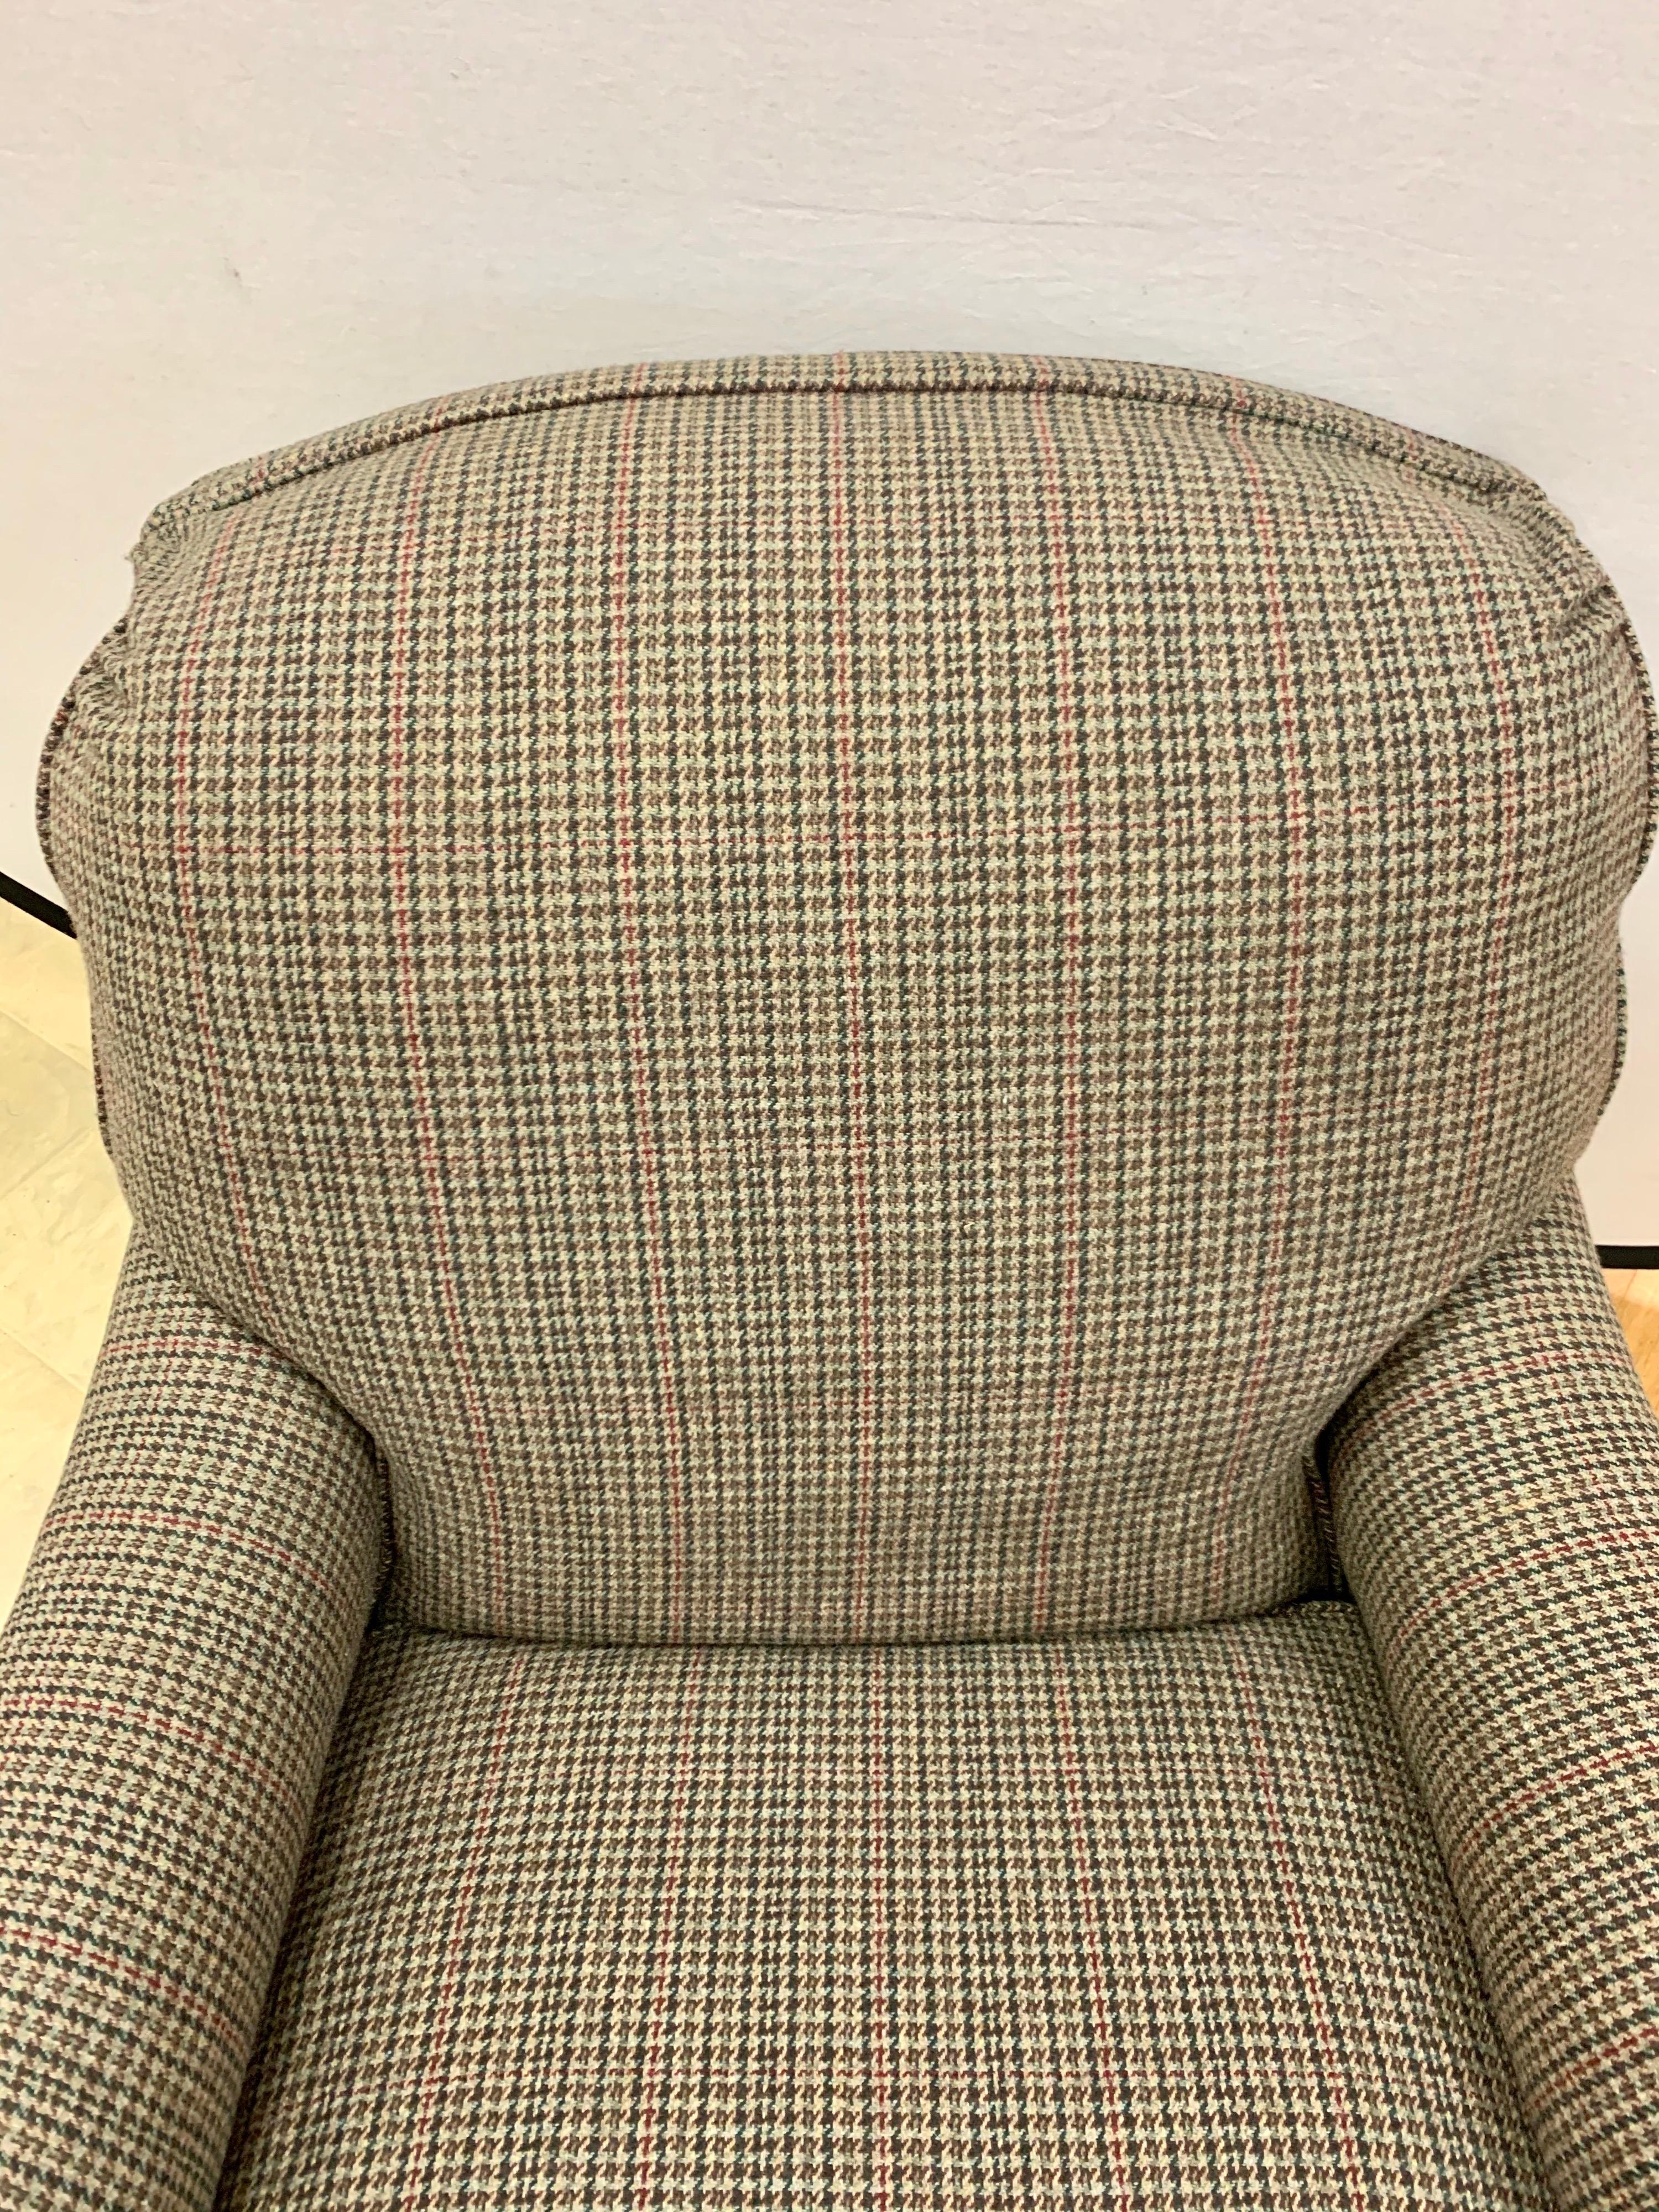 Late 20th Century Ralph Lauren Plaid Reading Chair Lounge Chair RL Tweed Fabric